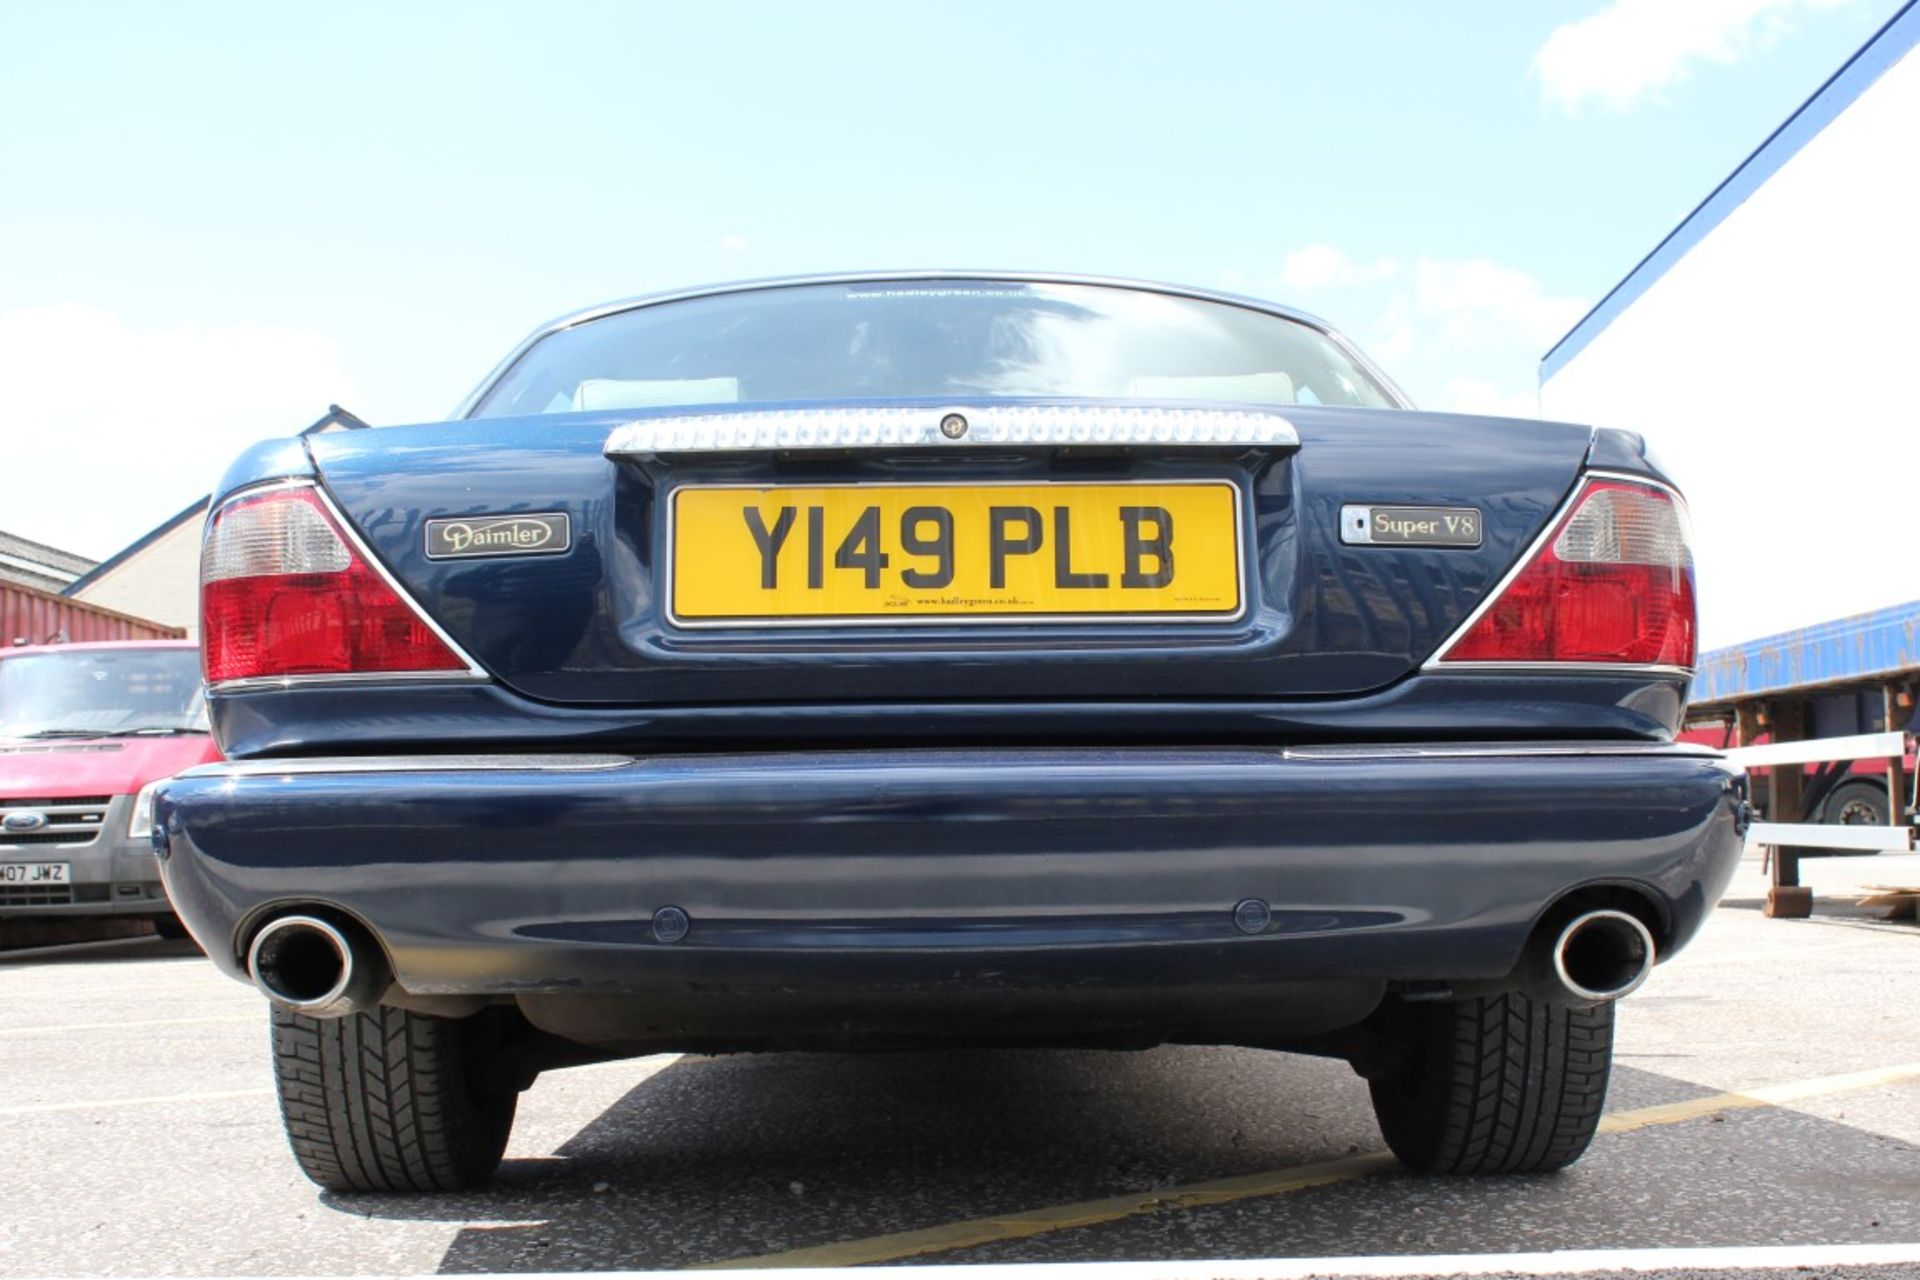 1 x Jaguar Daimler Super V8 Auto 4-Door Saloon - Year 2001 - Blue - Odometer Reading 122,520 - MOT - Image 9 of 77